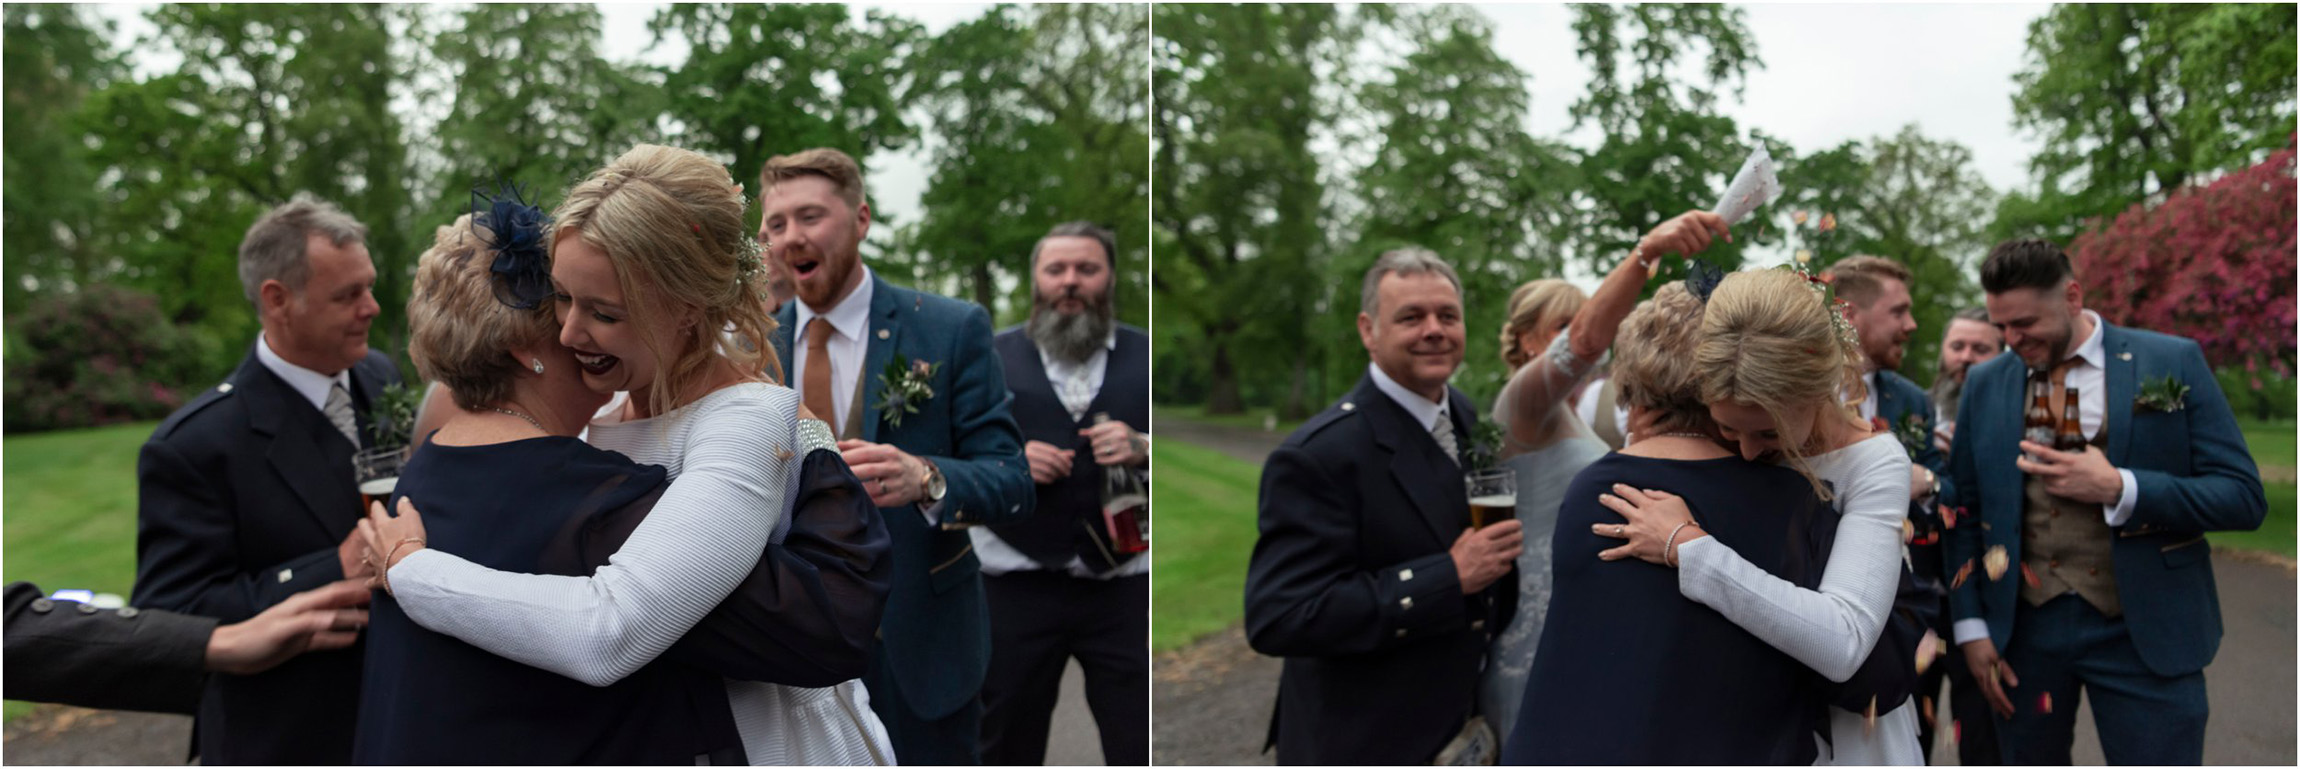 ©FianderFoto_Scotland Wedding Photographer_Errol Park Estate_Janine_Karl_166.jpg